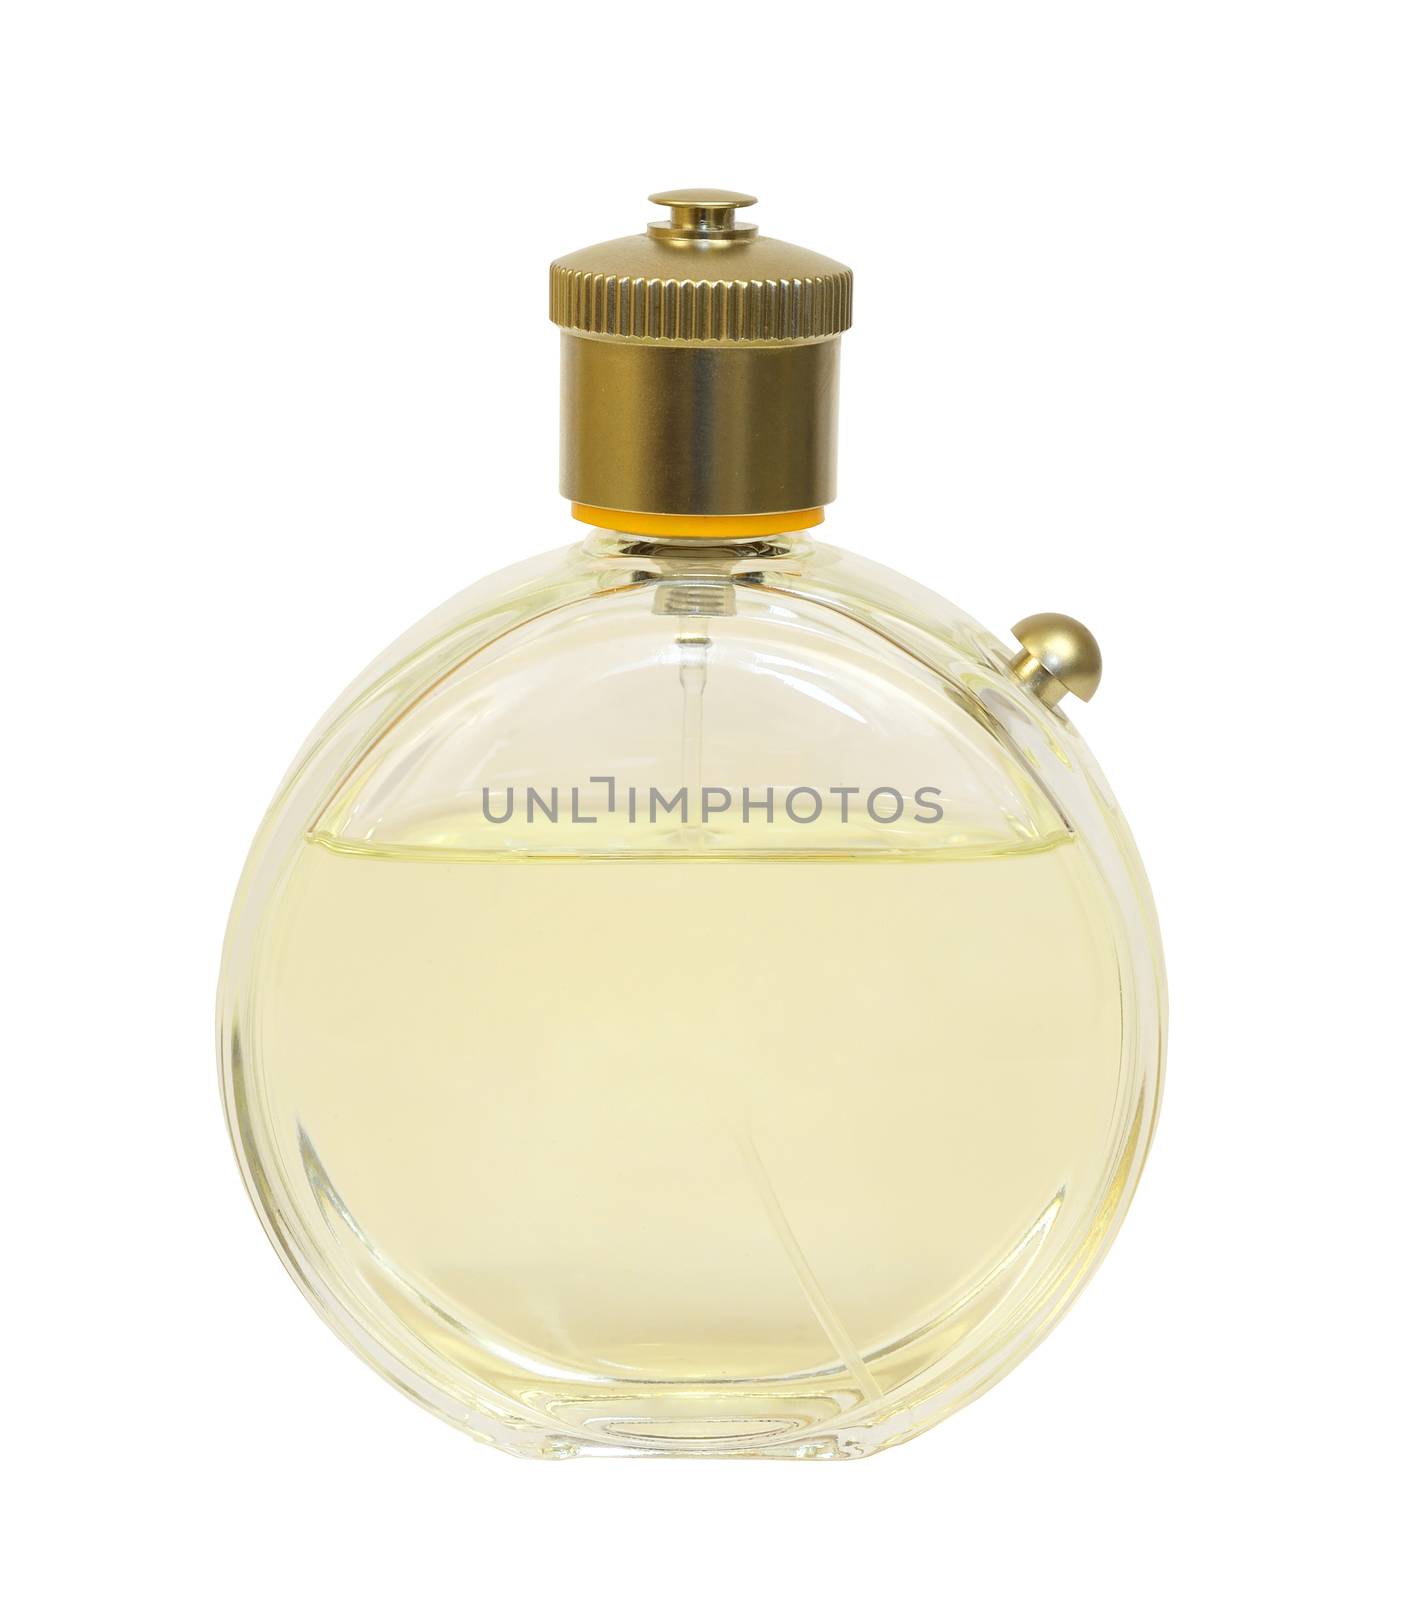 Perfume bottle. Isolated on the white background